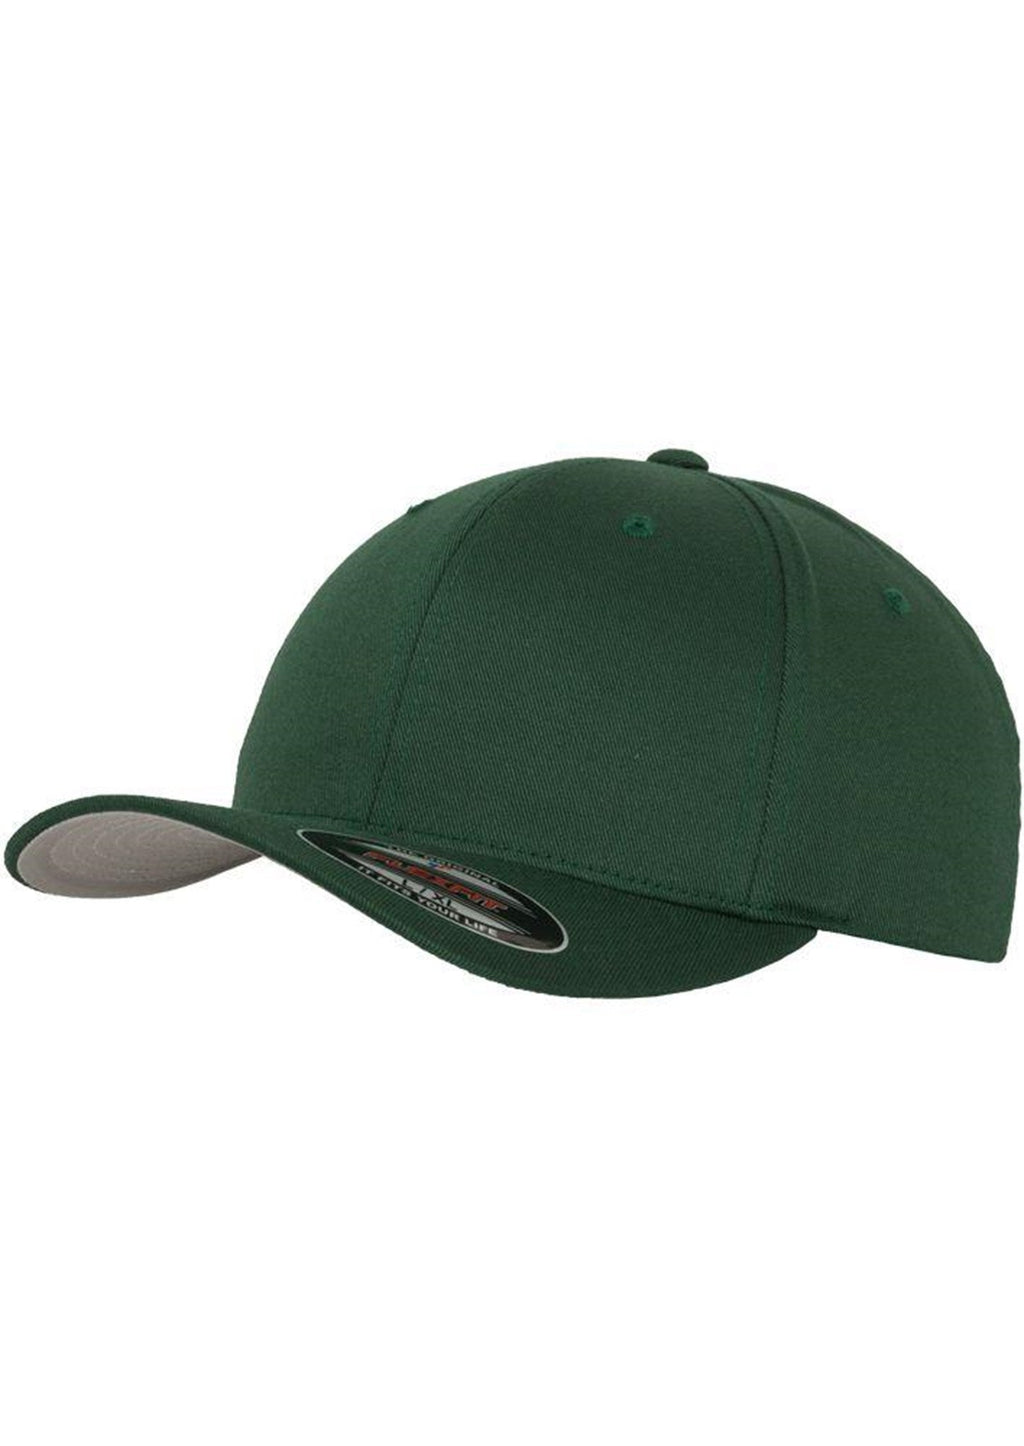 Originálna baseballová čiapka FlexFit - tmavozelená